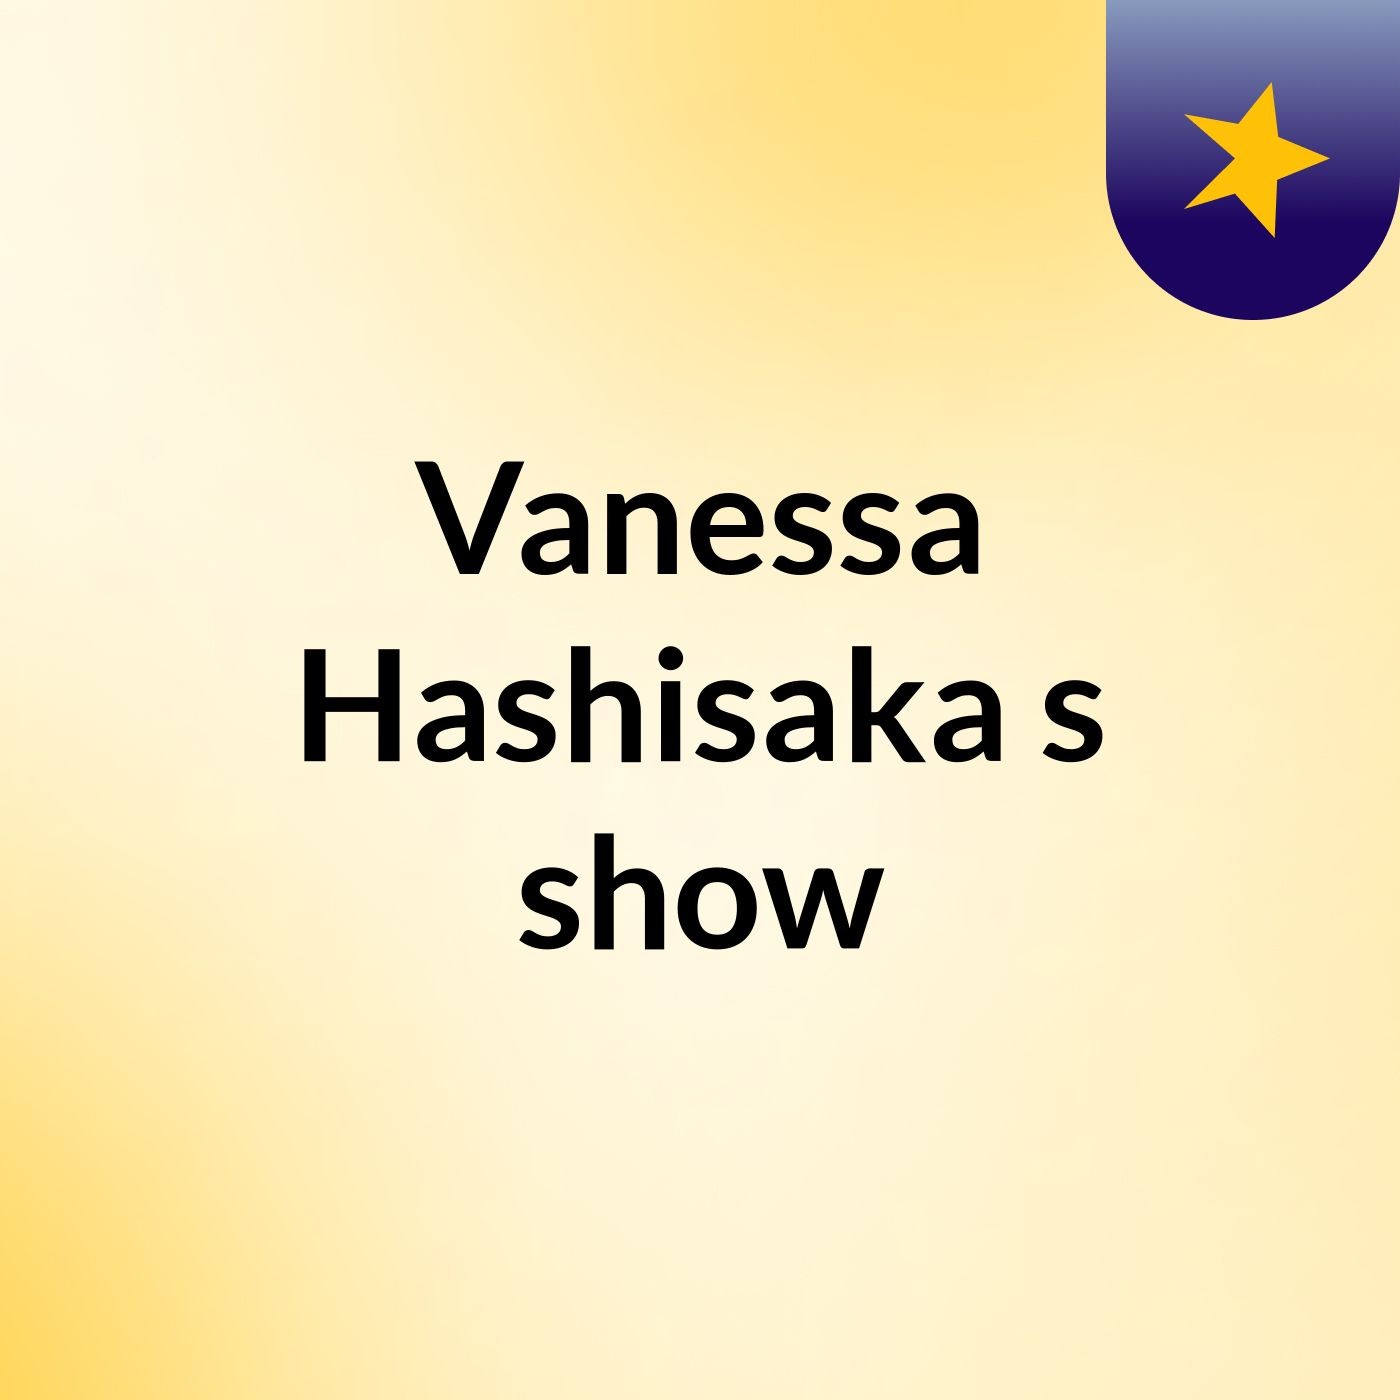 Vanessa Hashisaka's show